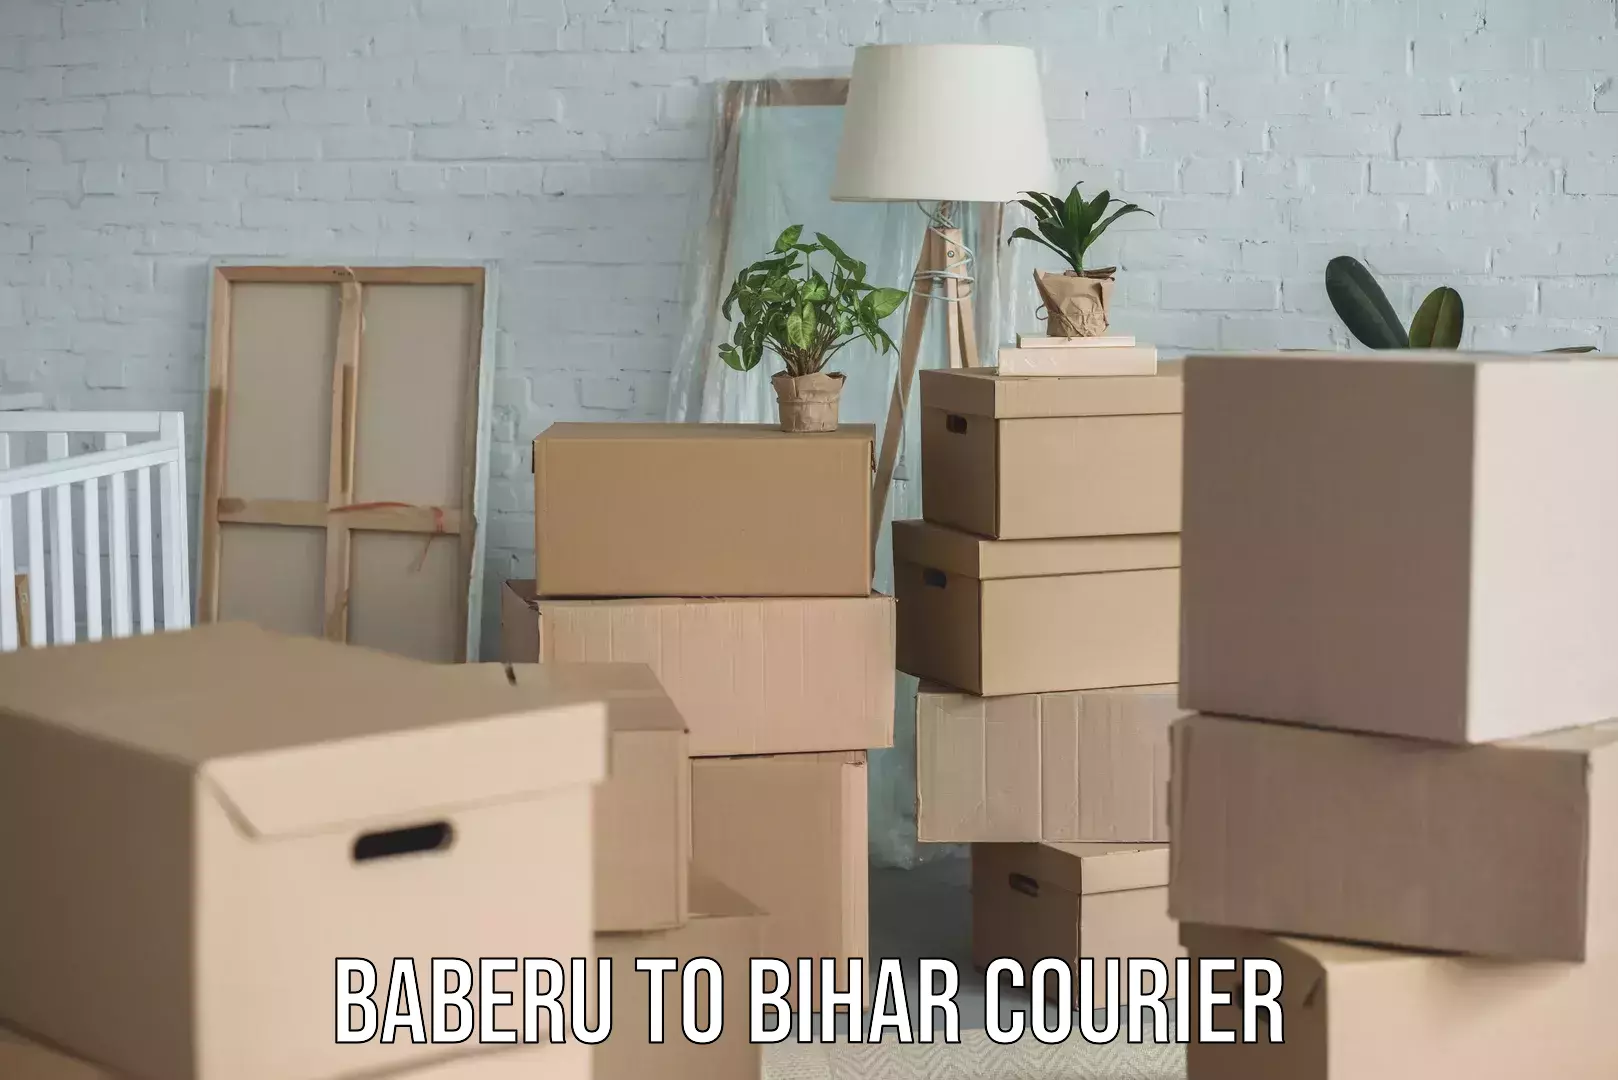 Urgent courier needs Baberu to Malmaliya